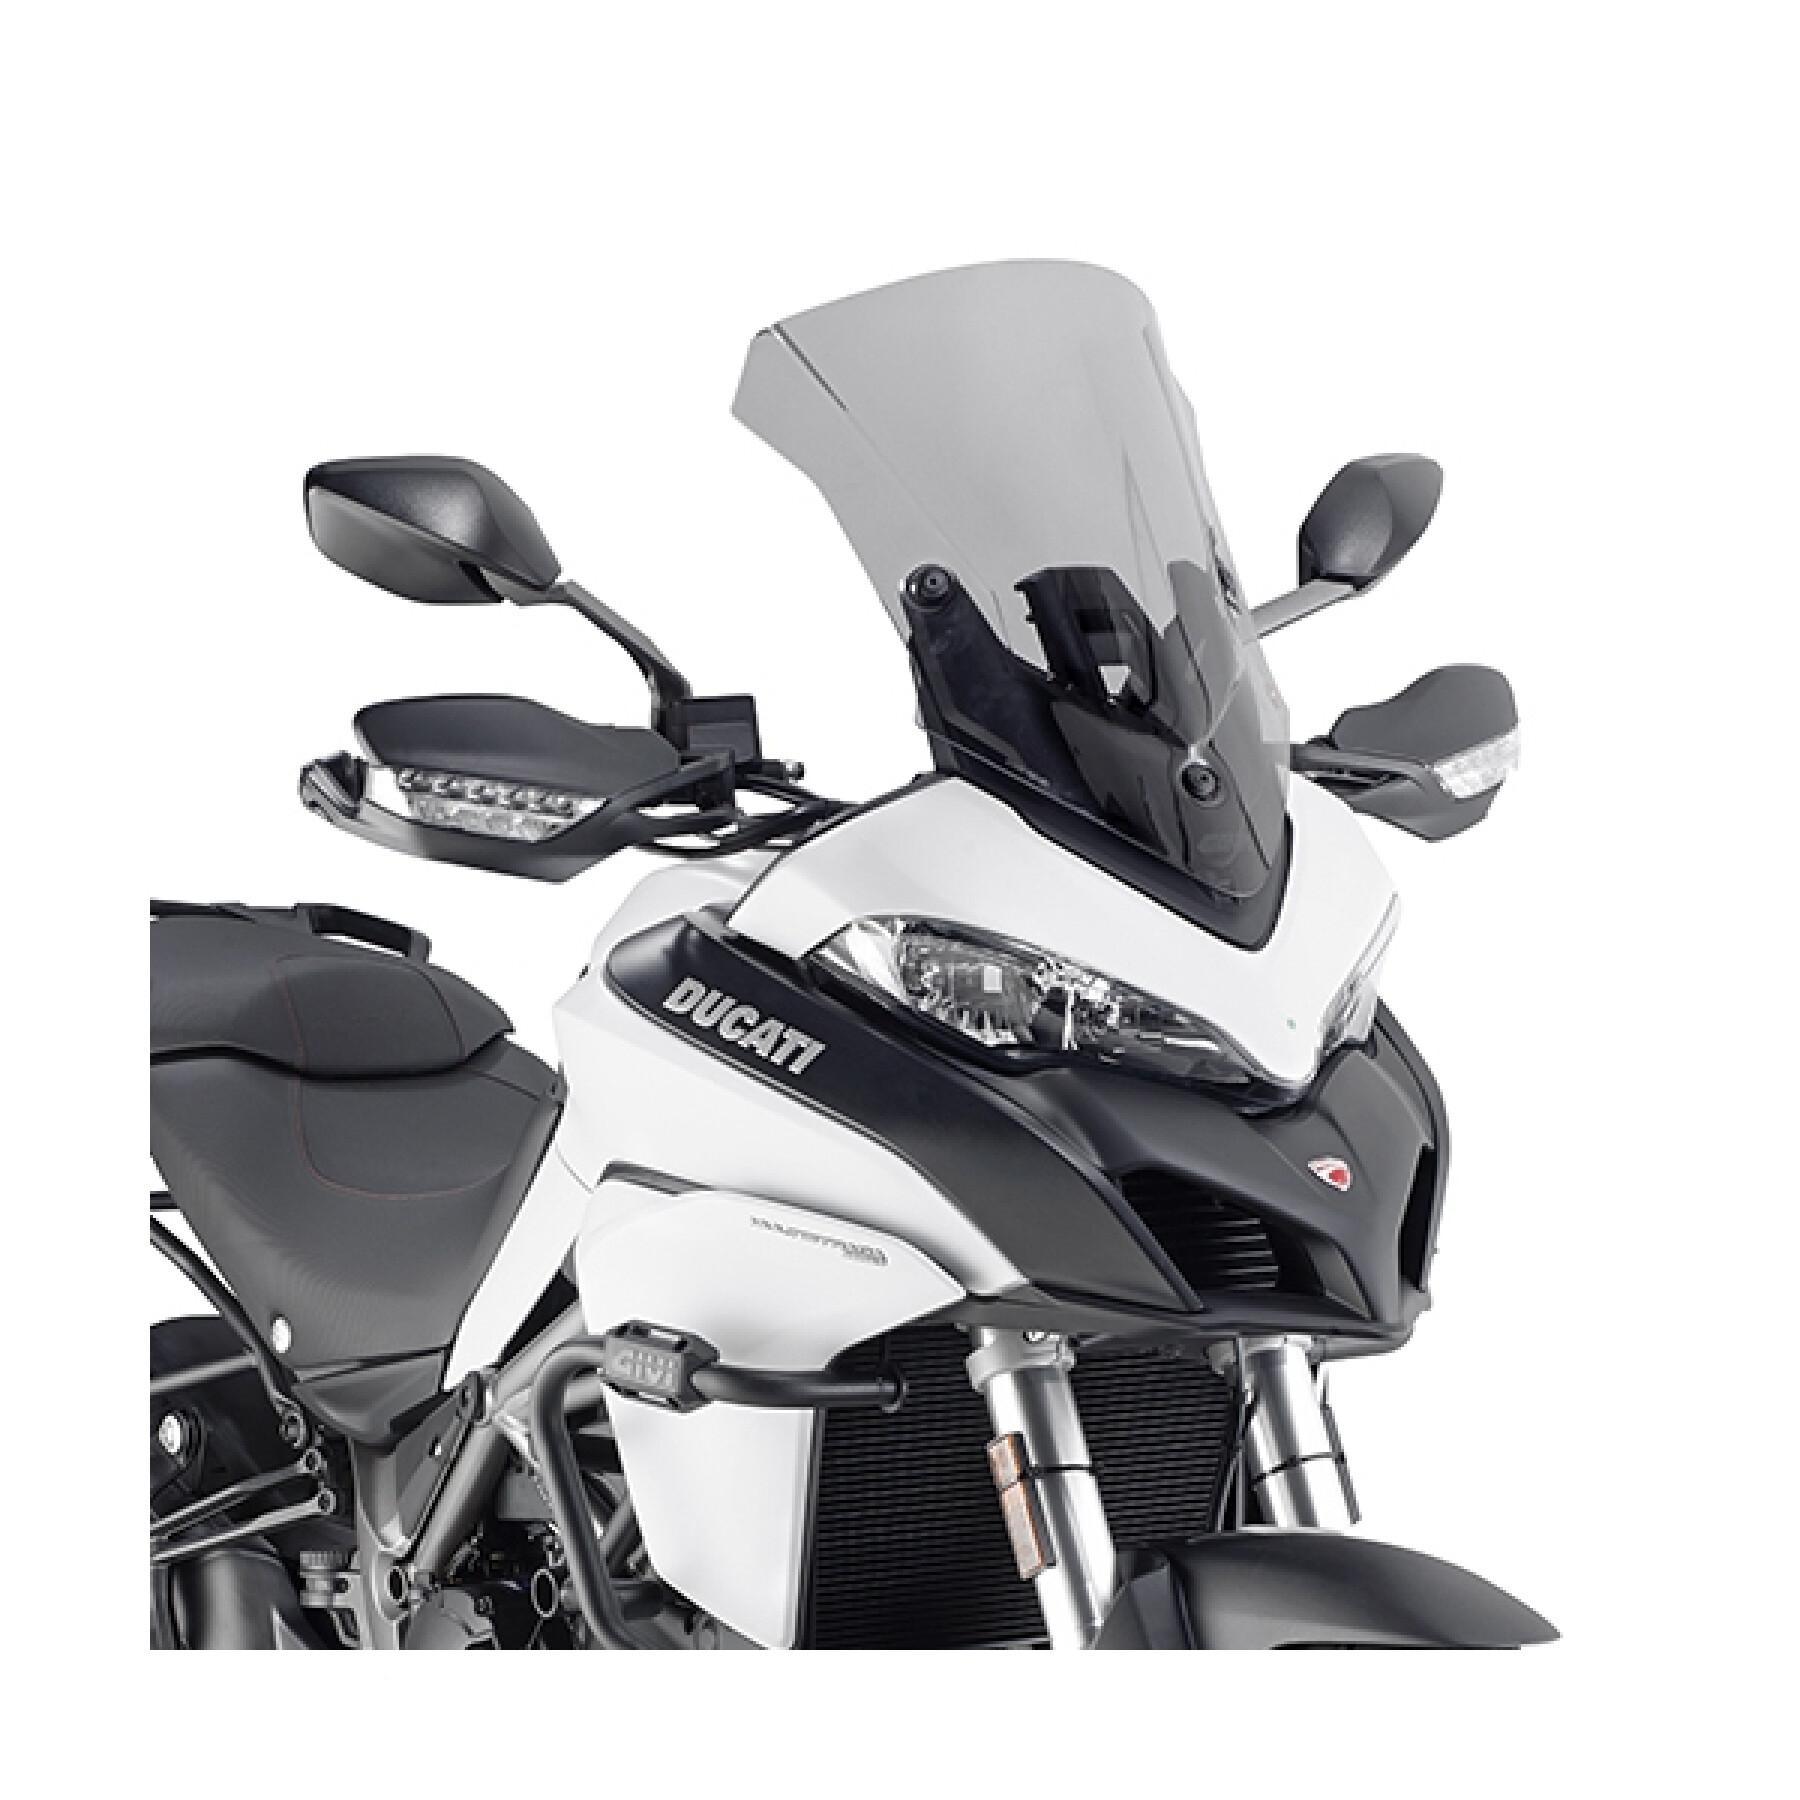 Moto bolla Givi Basse et Sportive Ducati Multistrada 1200 (15 À 18)